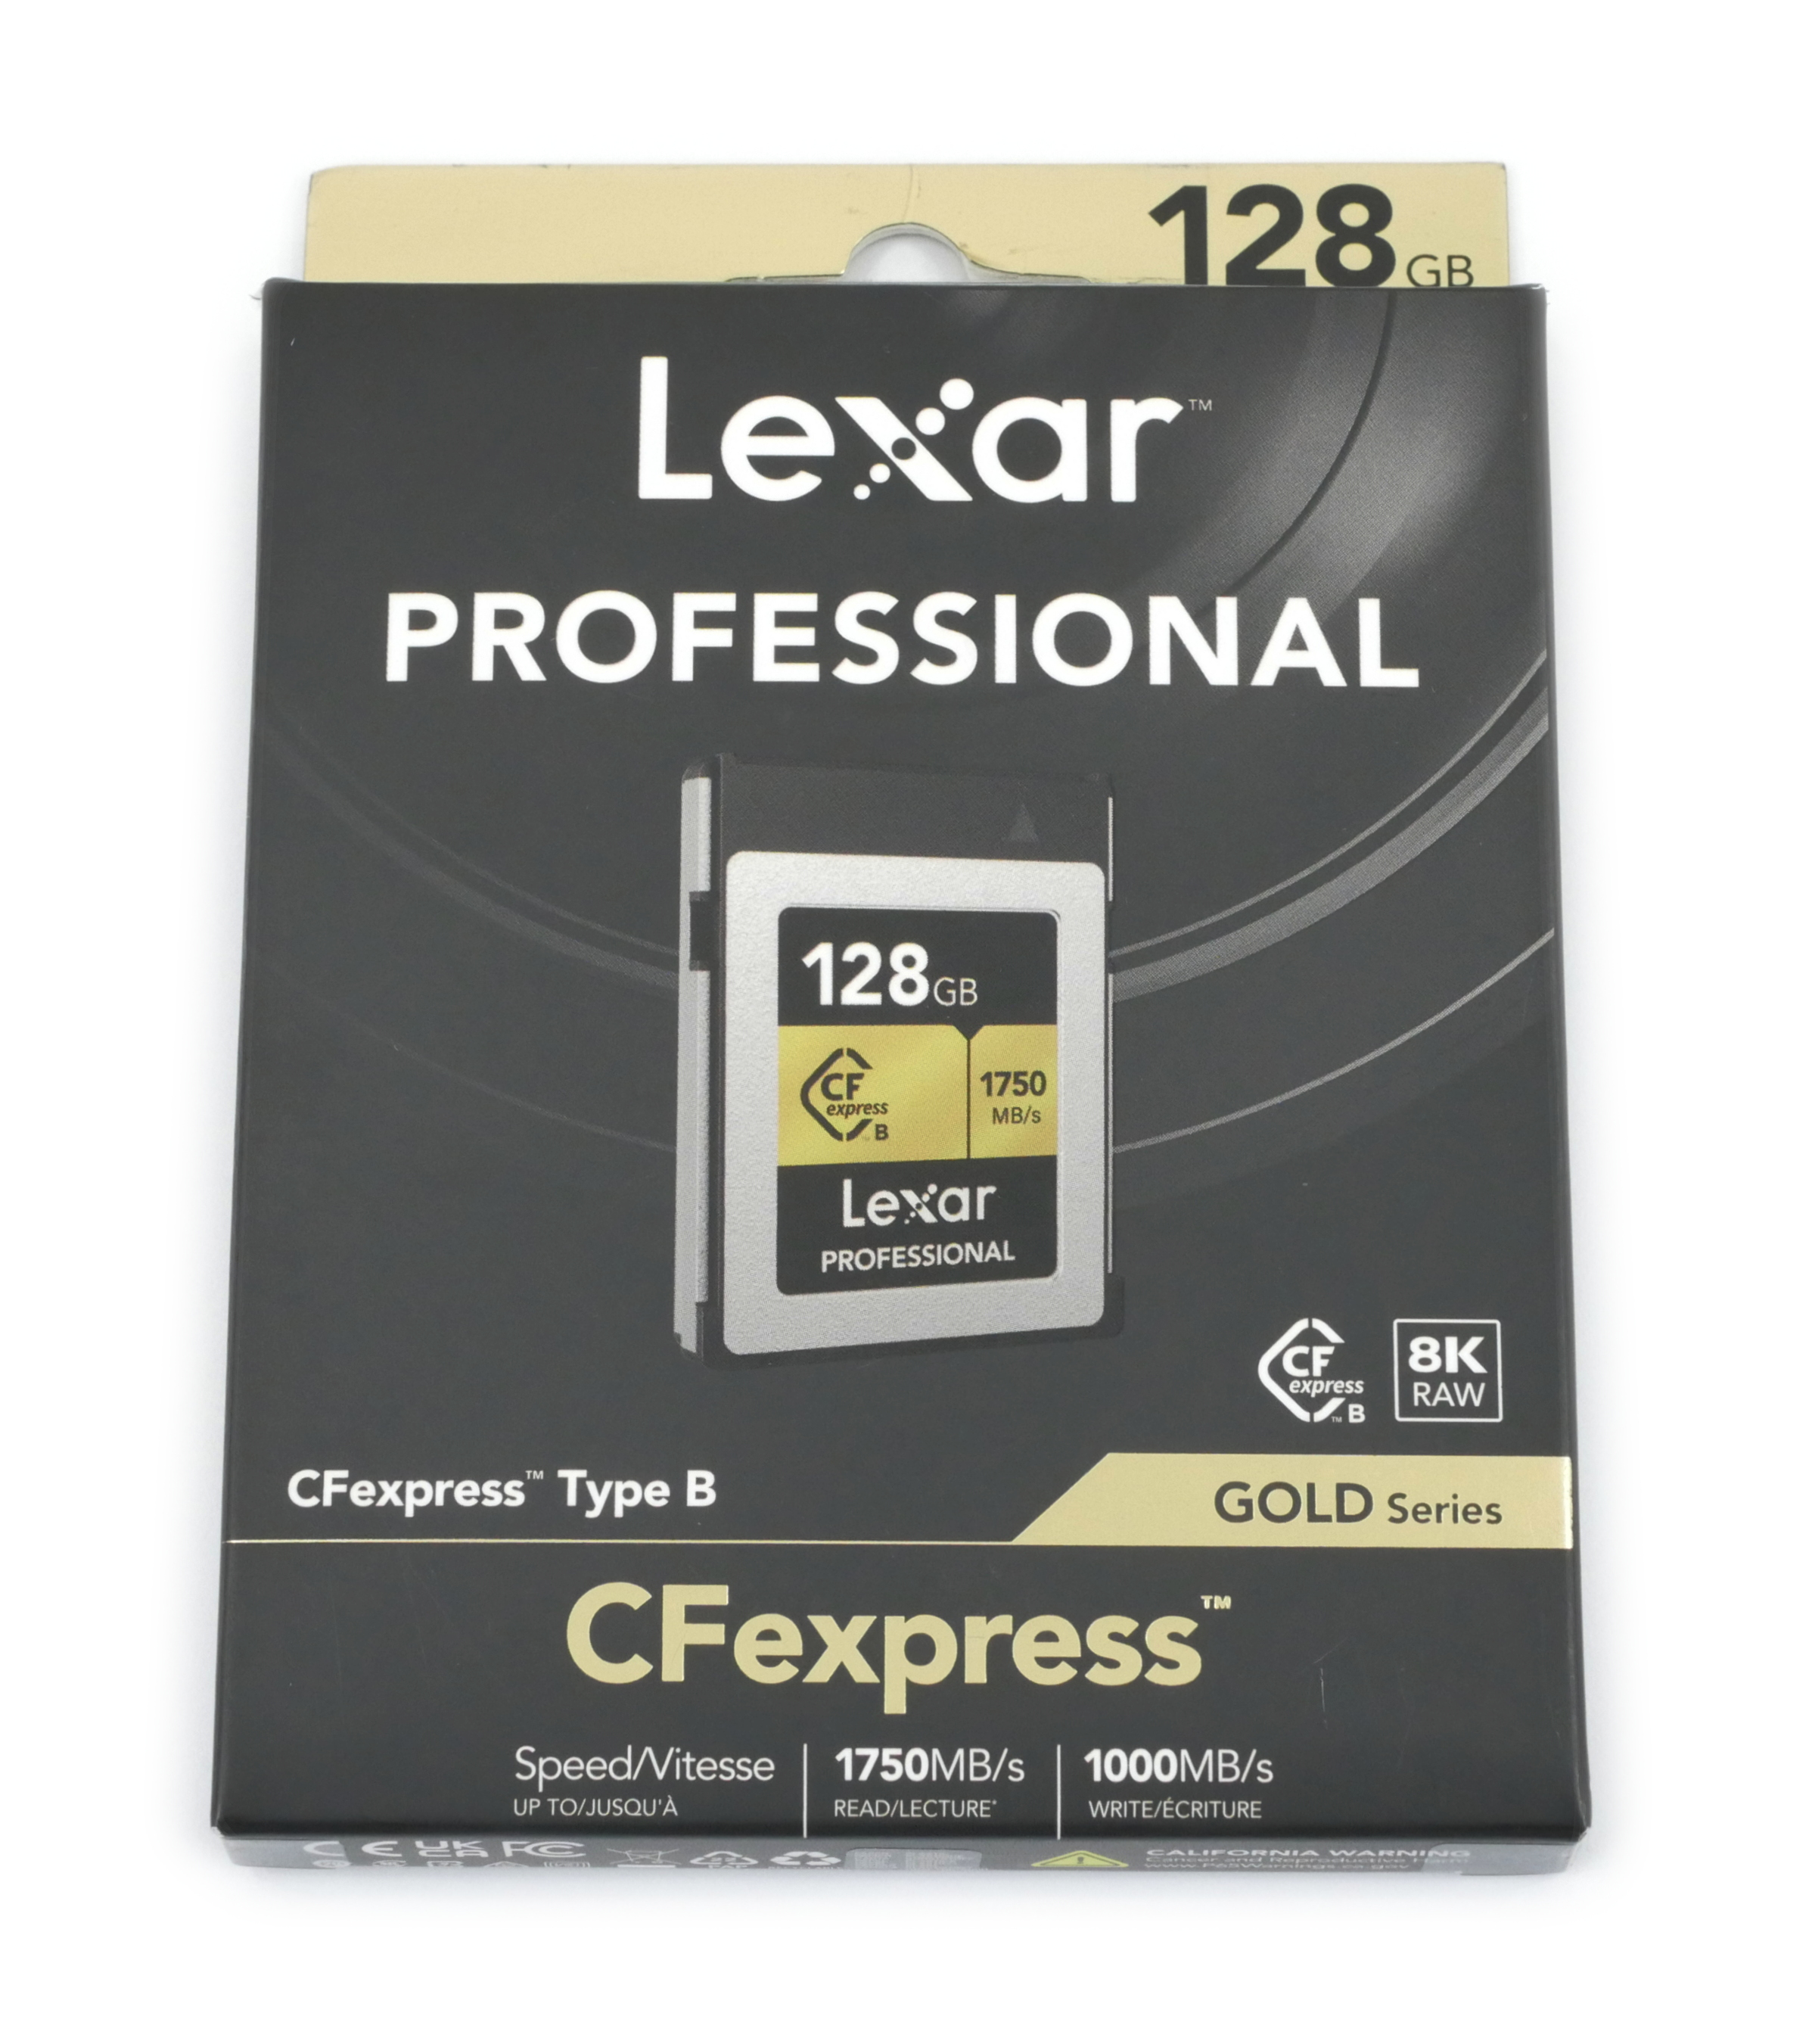 Lexar 128GB Professional CFexpress Type B Card GOLD Series LCFX10-128CRBNA